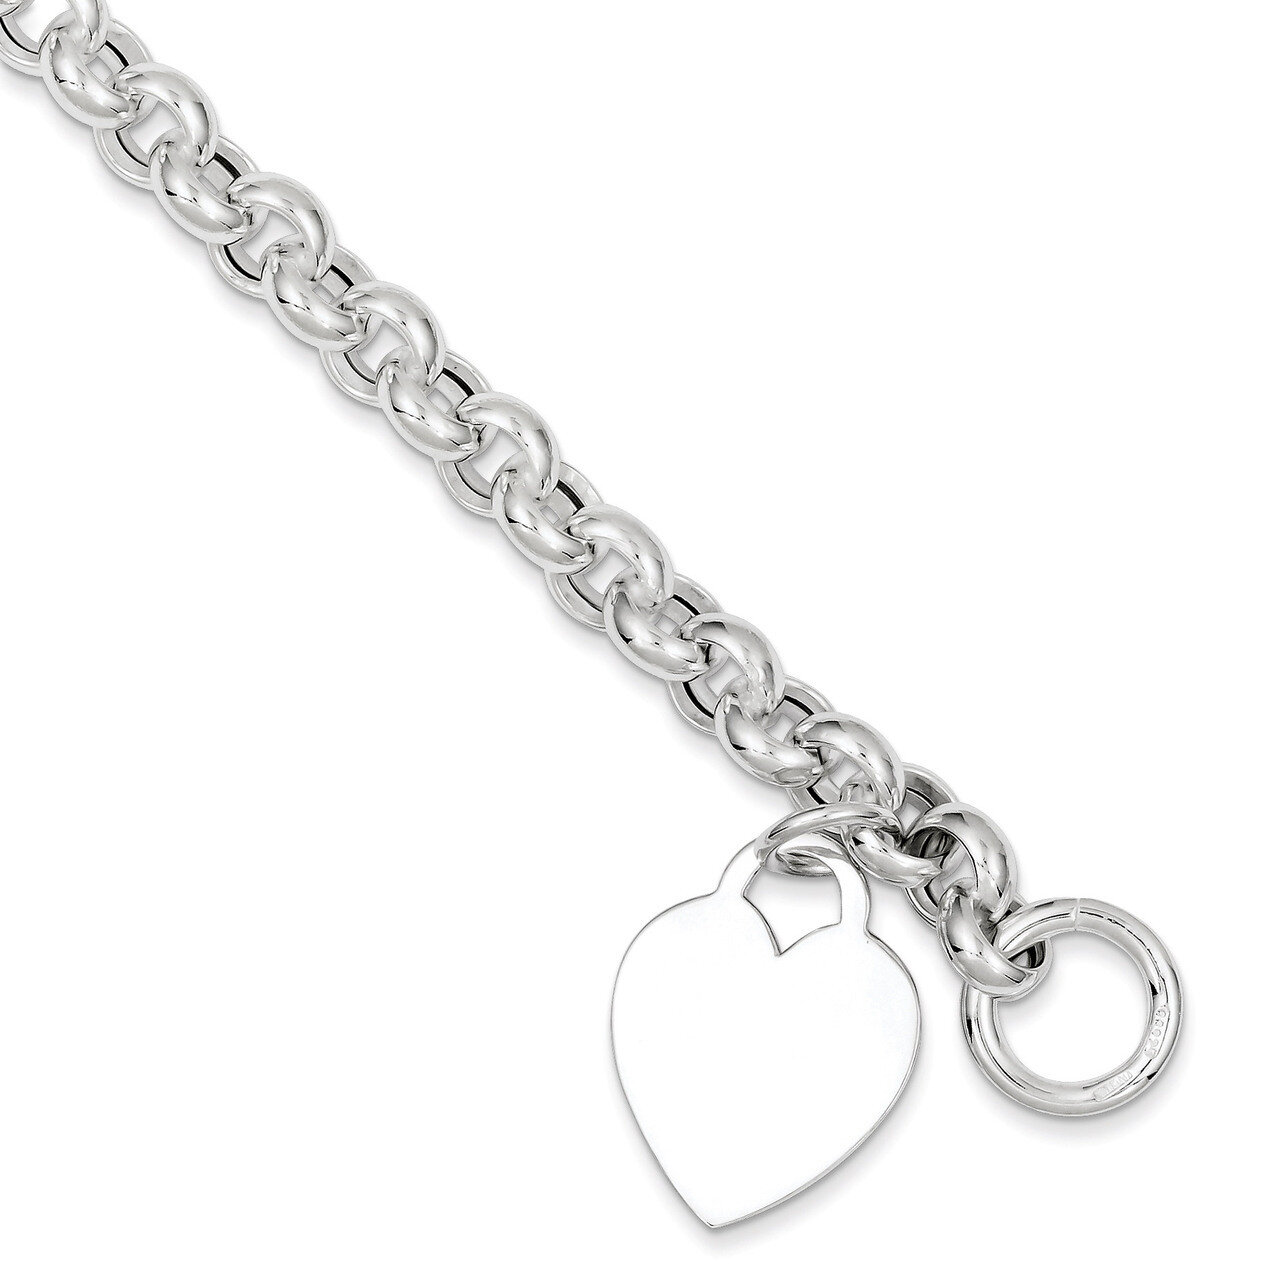 7.5 Inch Heart Toggle Bracelet Sterling Silver QG3088-7.5